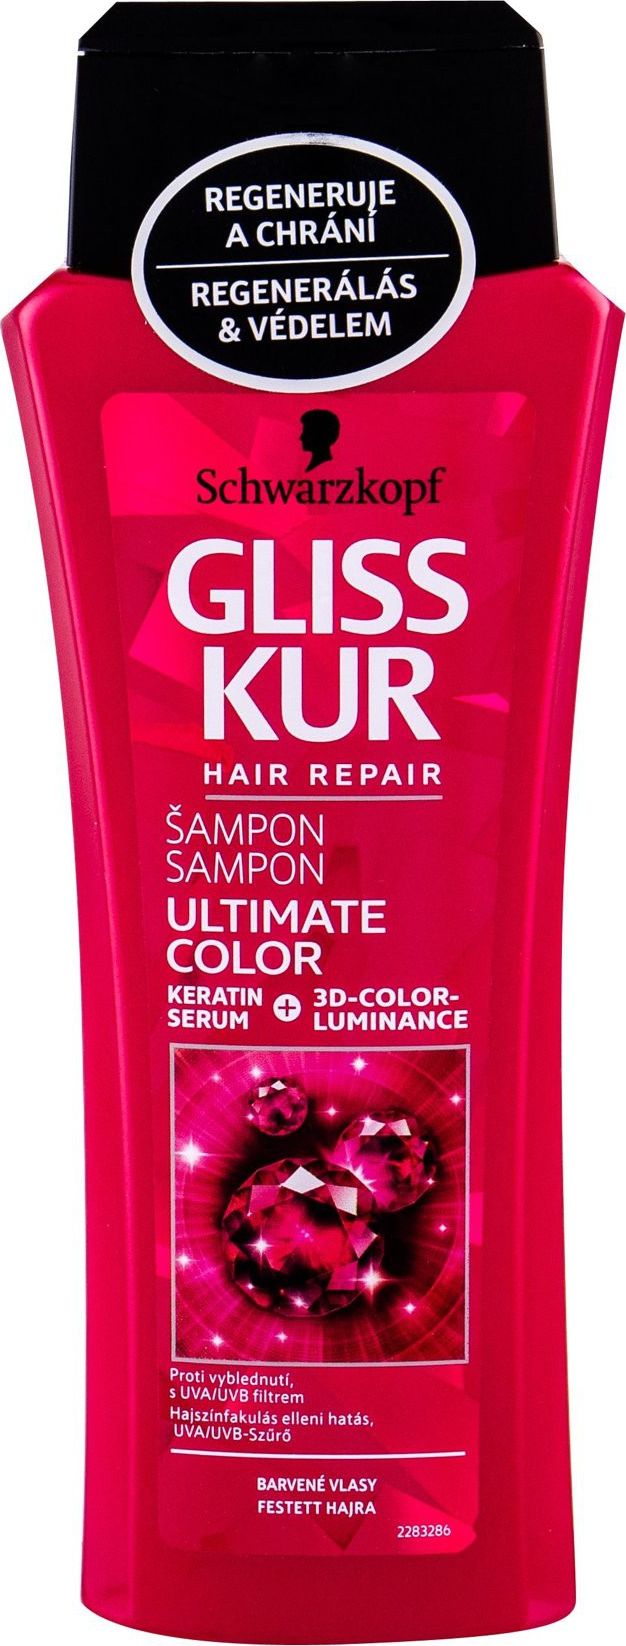 Gliss Kur Ultimate Color Shampoo sampon pentru par vopsit, tonifiat si luminos 250 ml